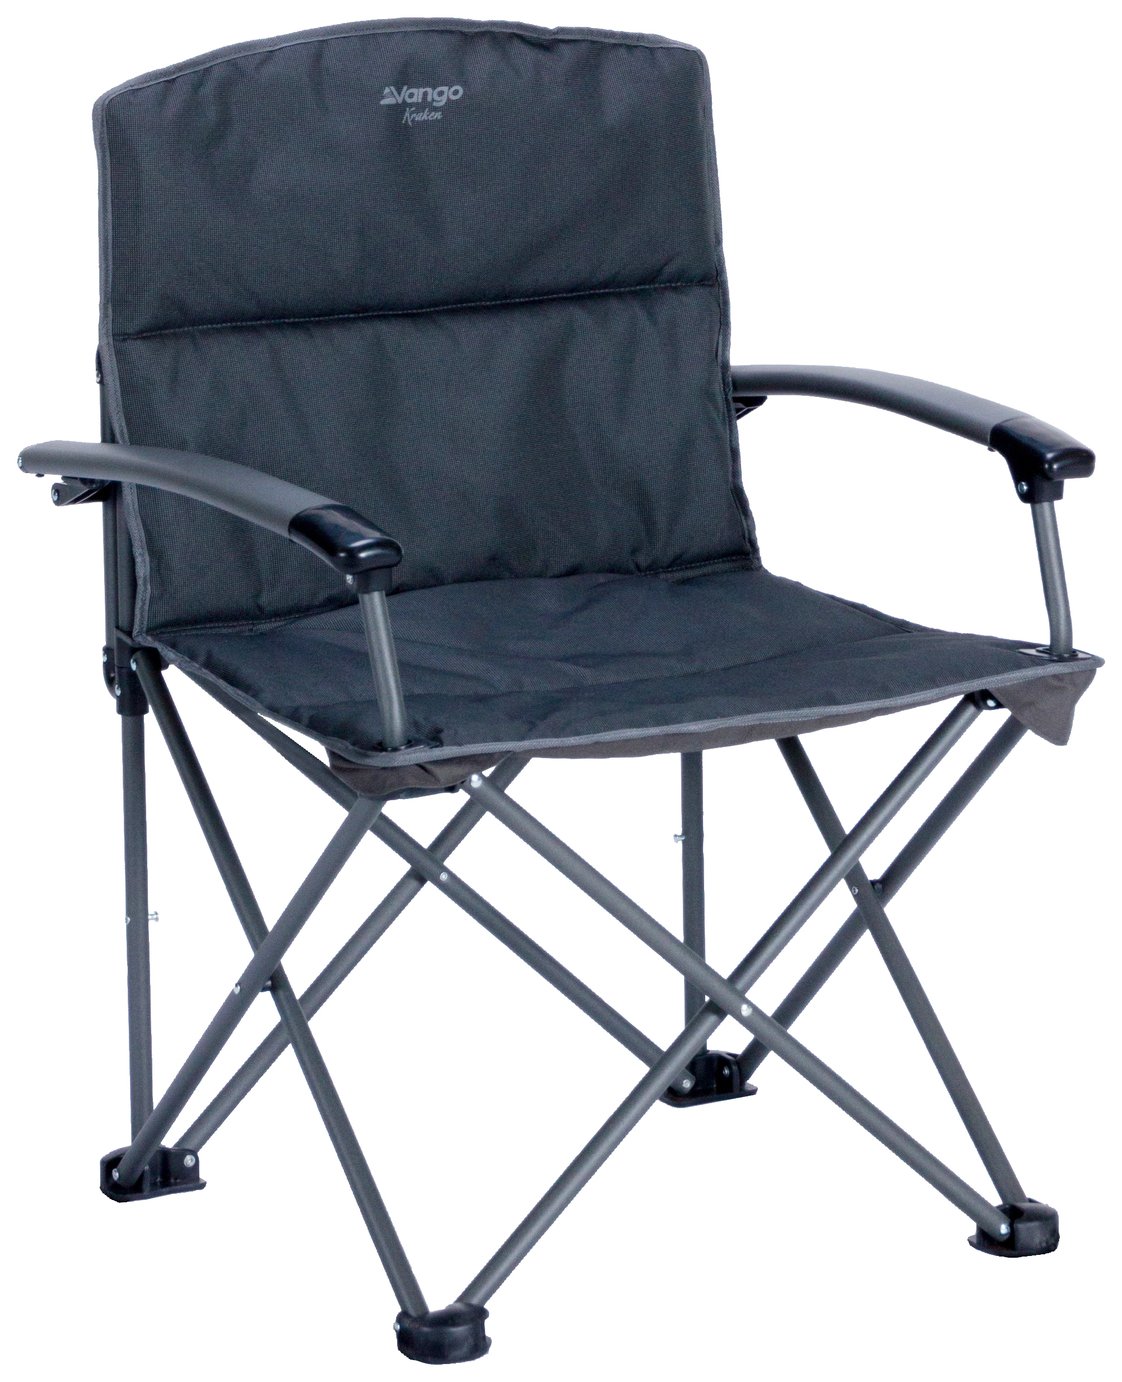 cheap camping chairs asda